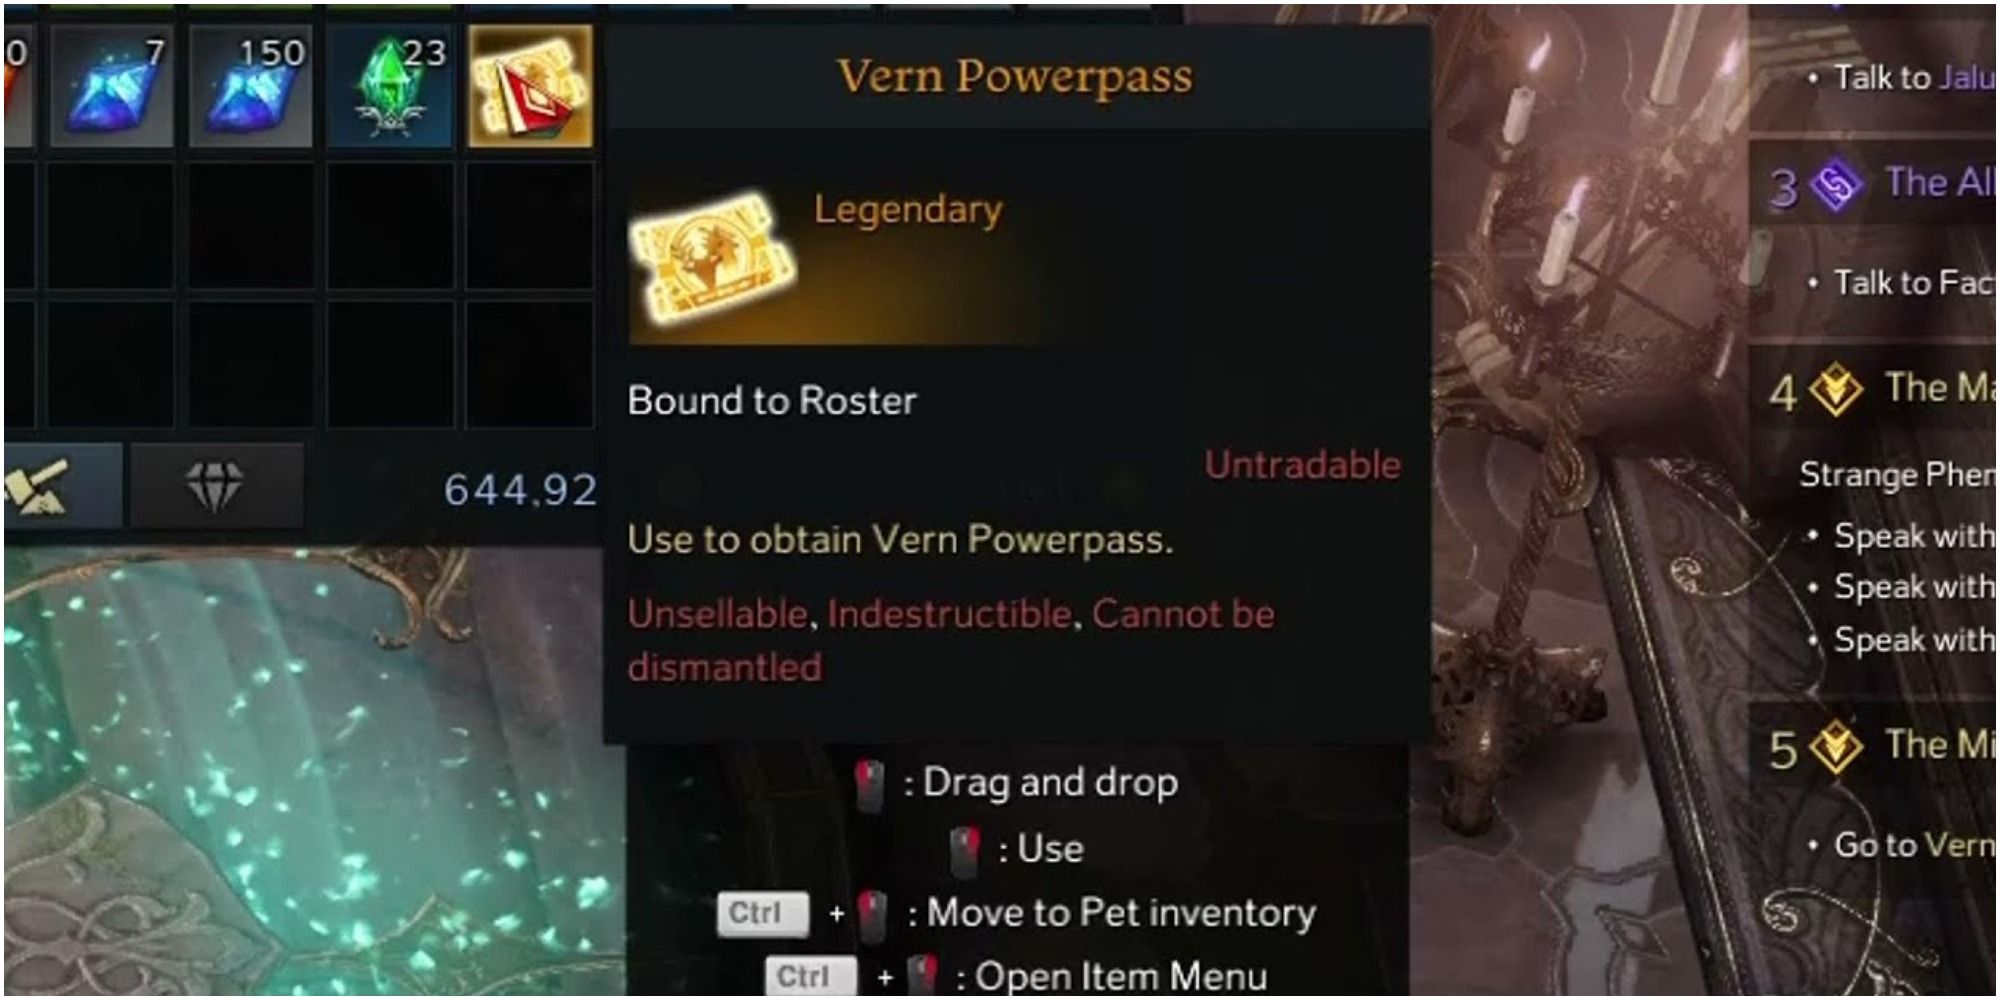 Lost Ark Vern Powerpass in-game item description